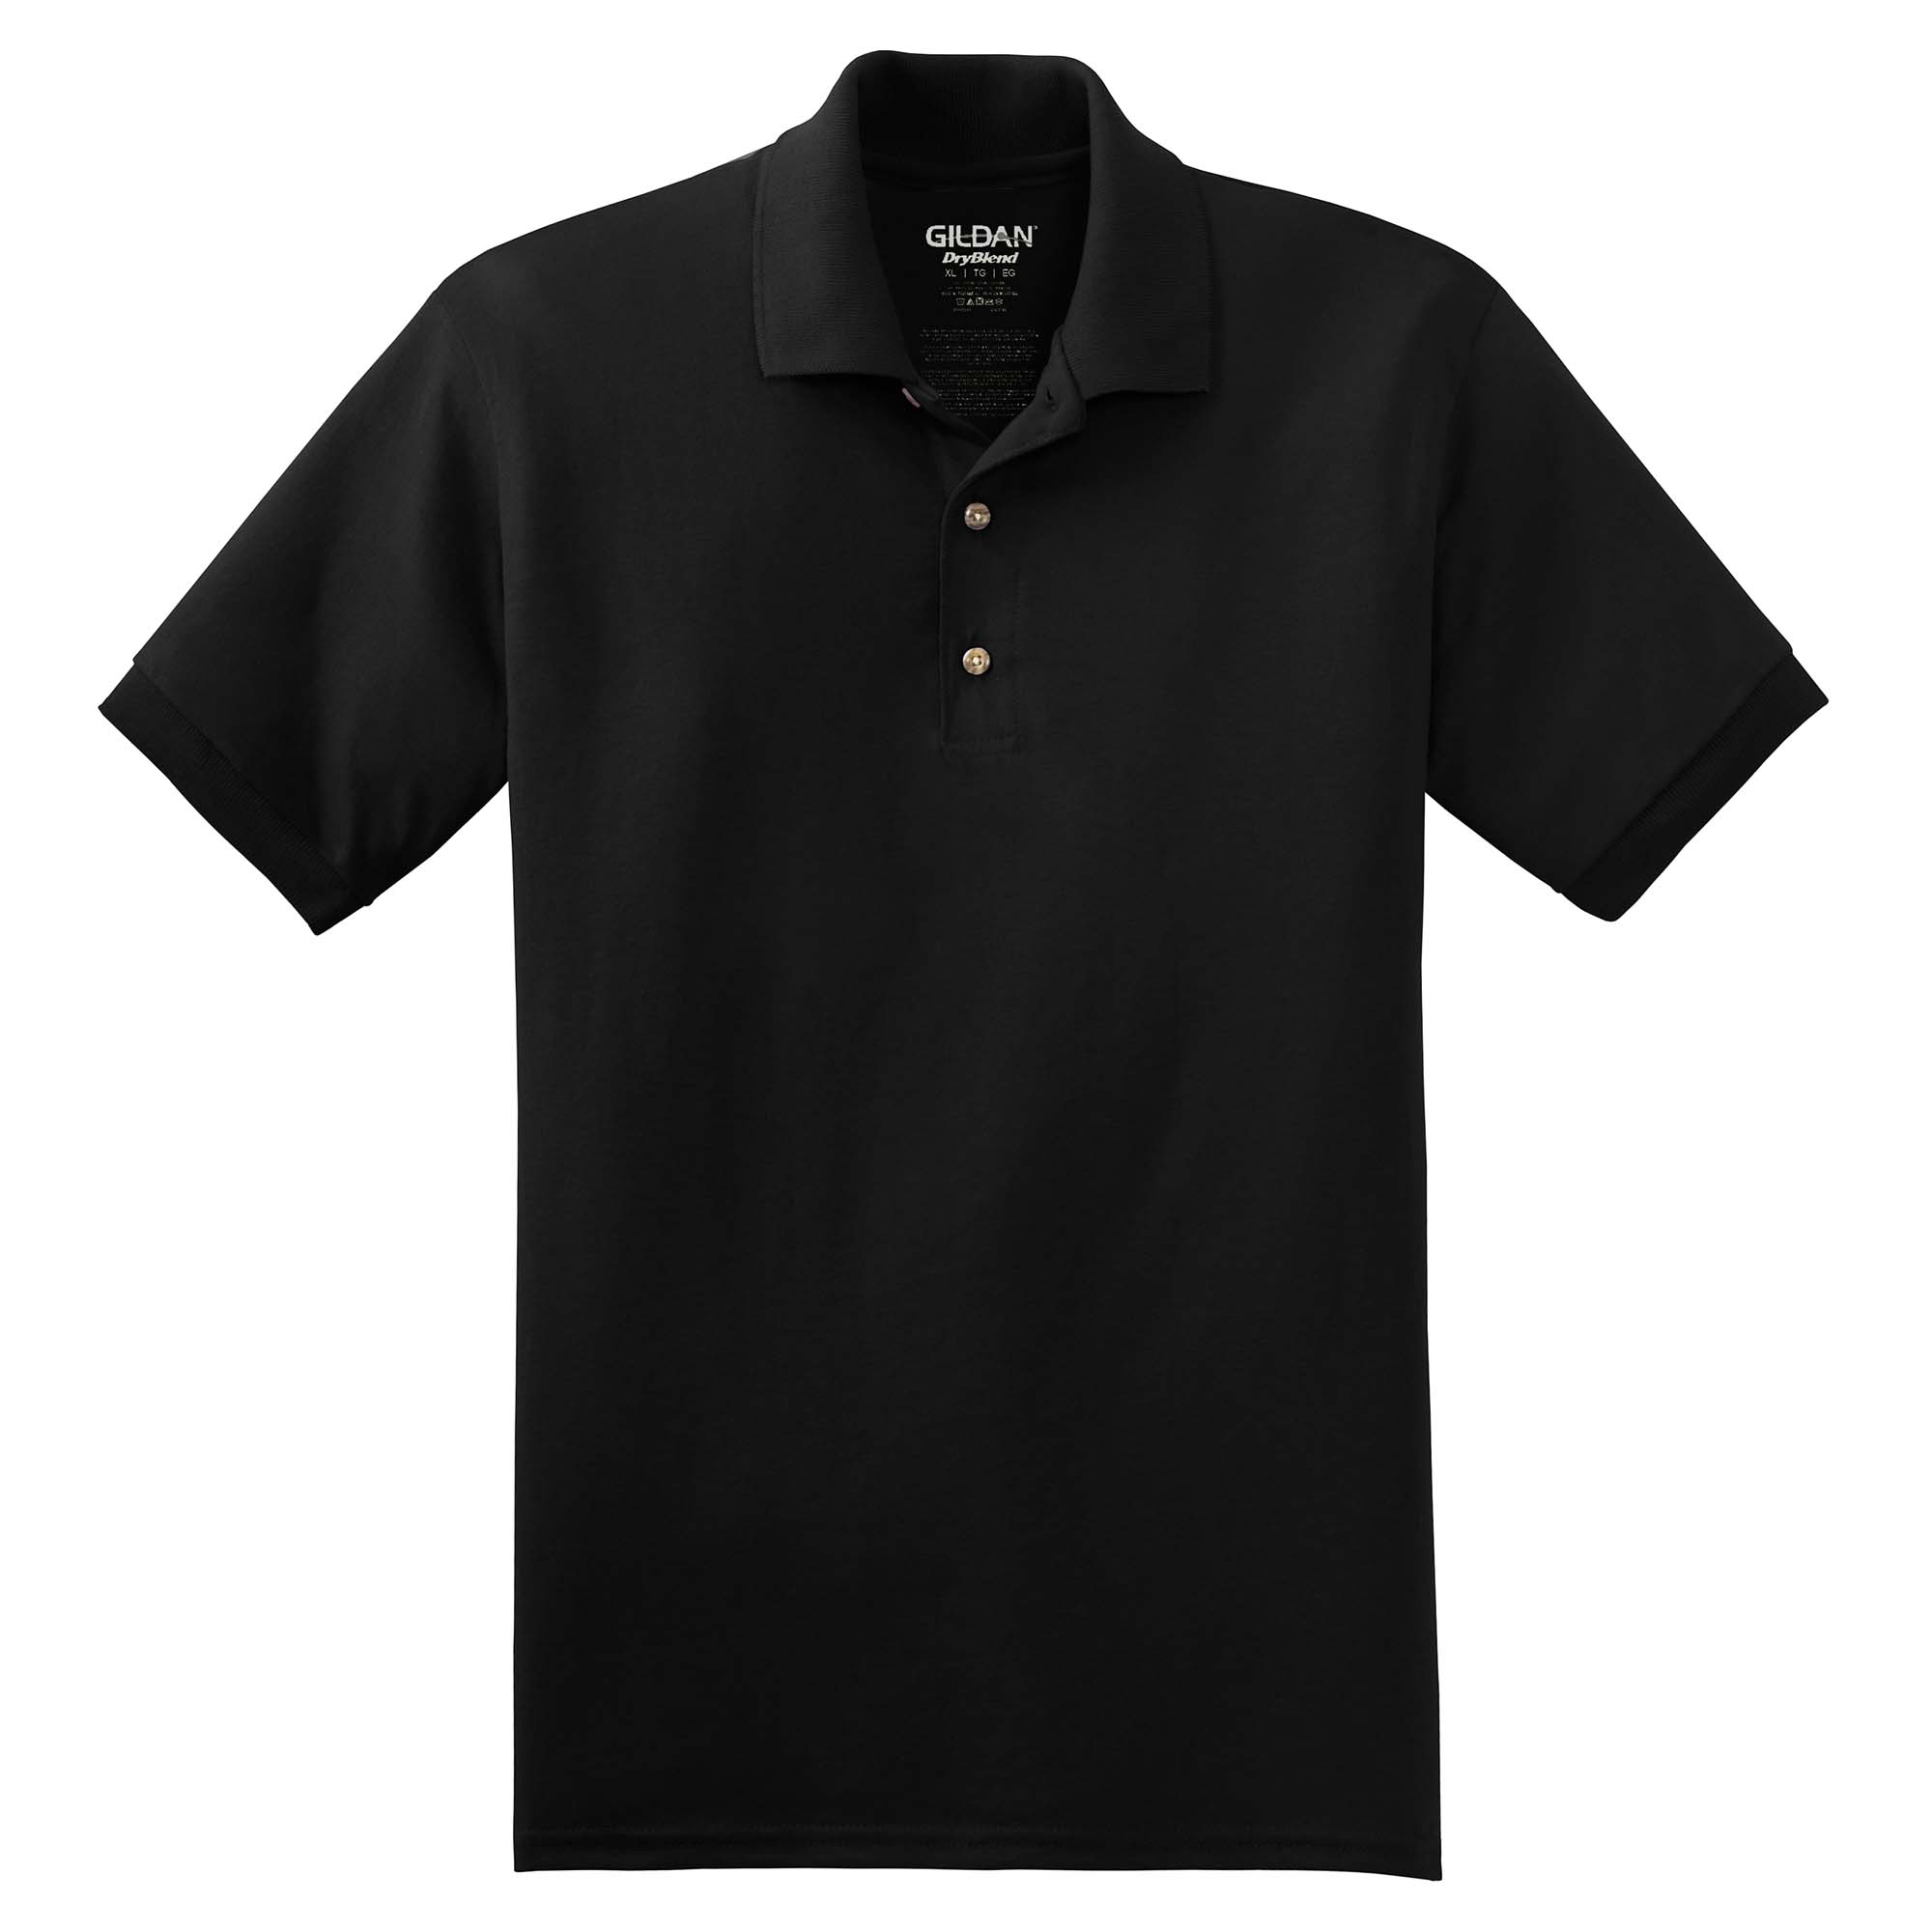 Gildan 8800 DryBlend Jersey Knit Sport Shirt in Black